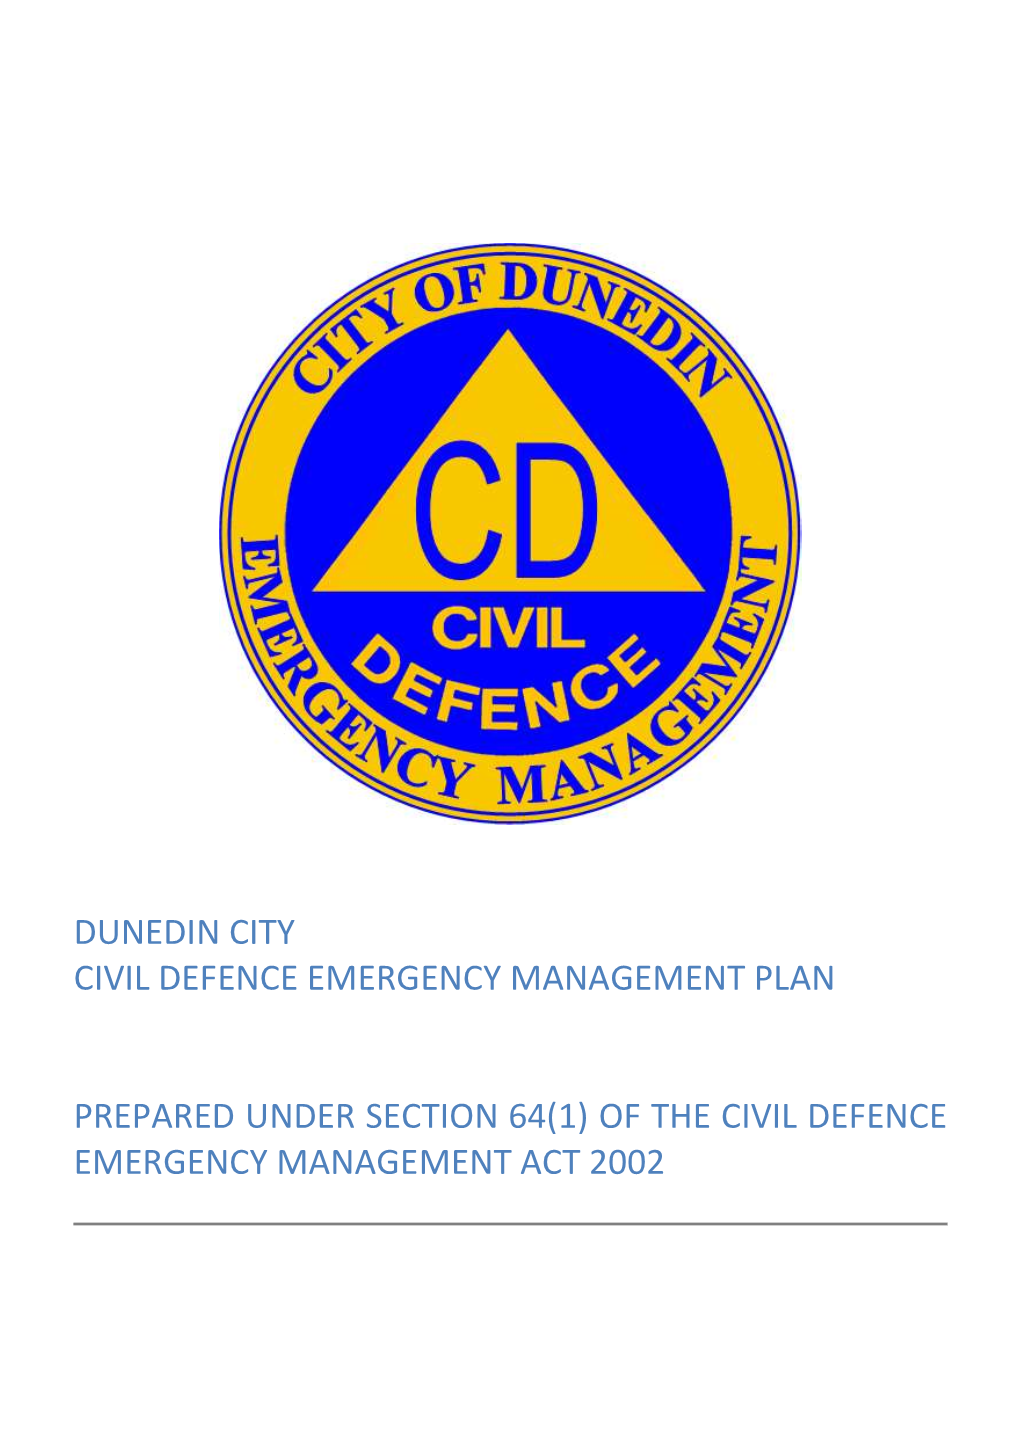 Dunedin City Emergency Management Plan